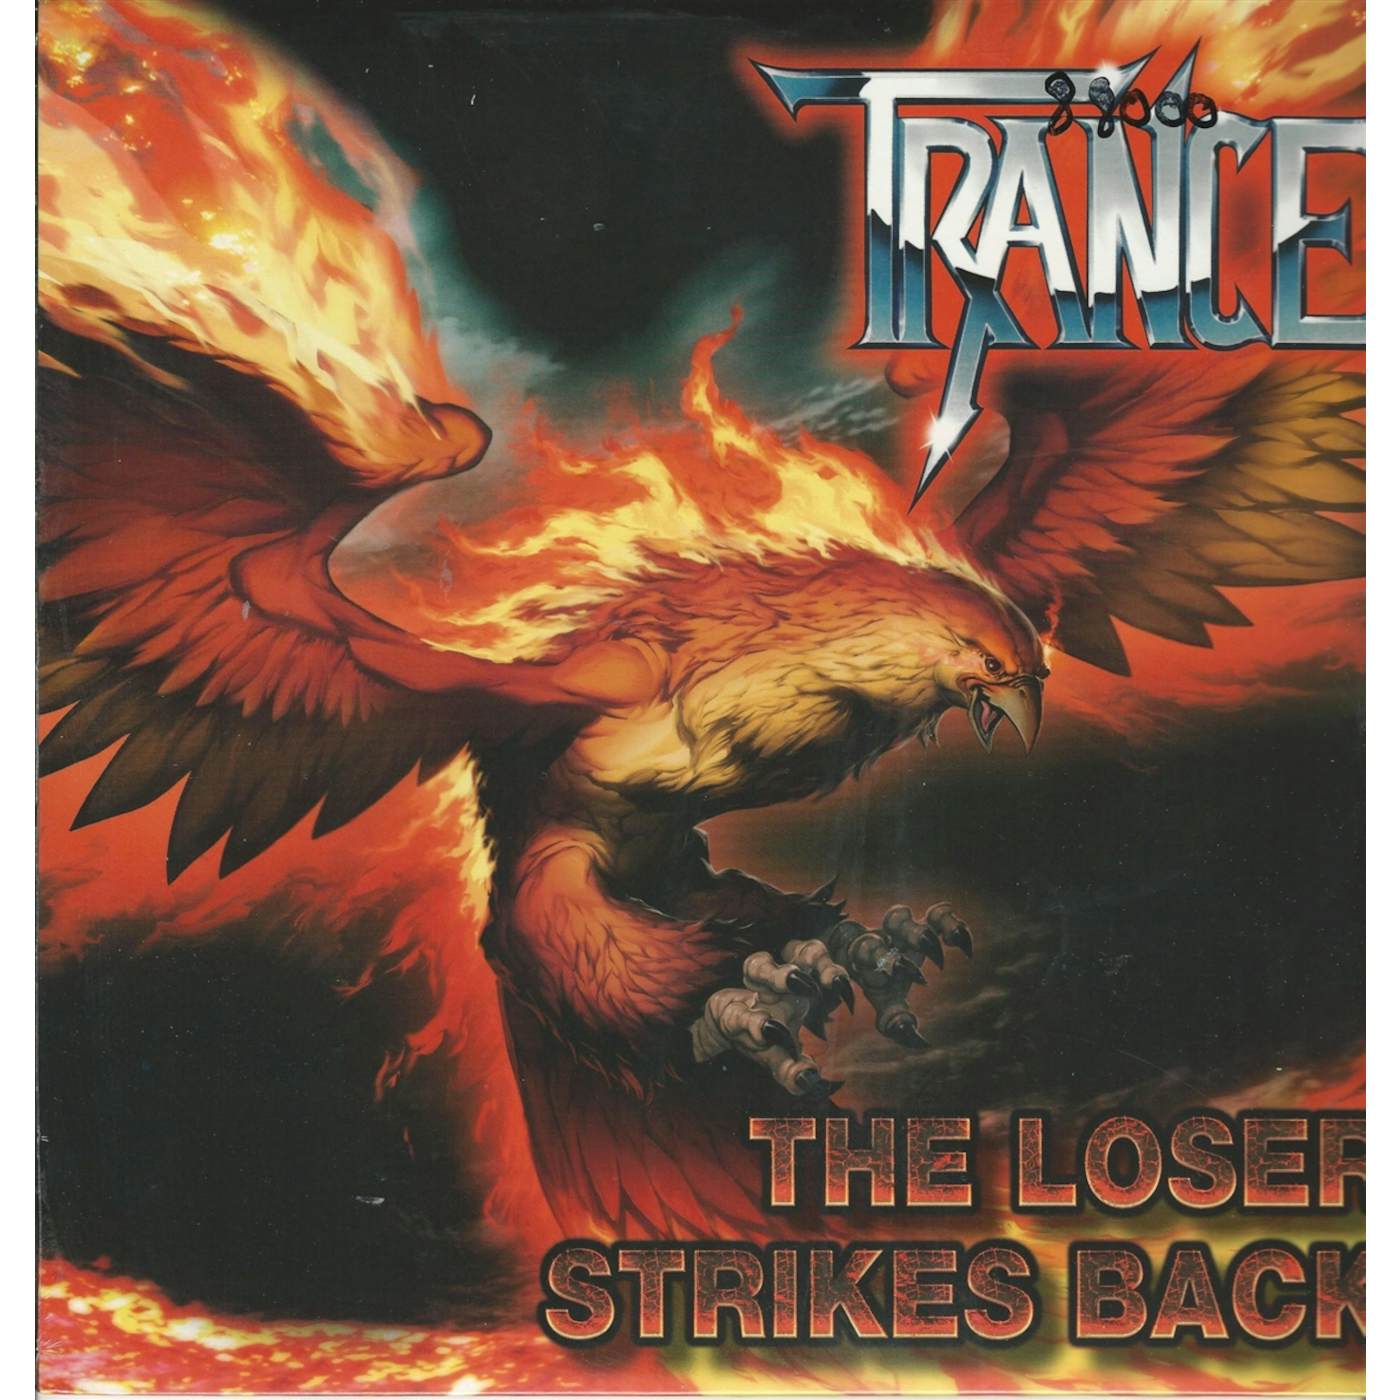 Trance The Loser Strikes Back CD